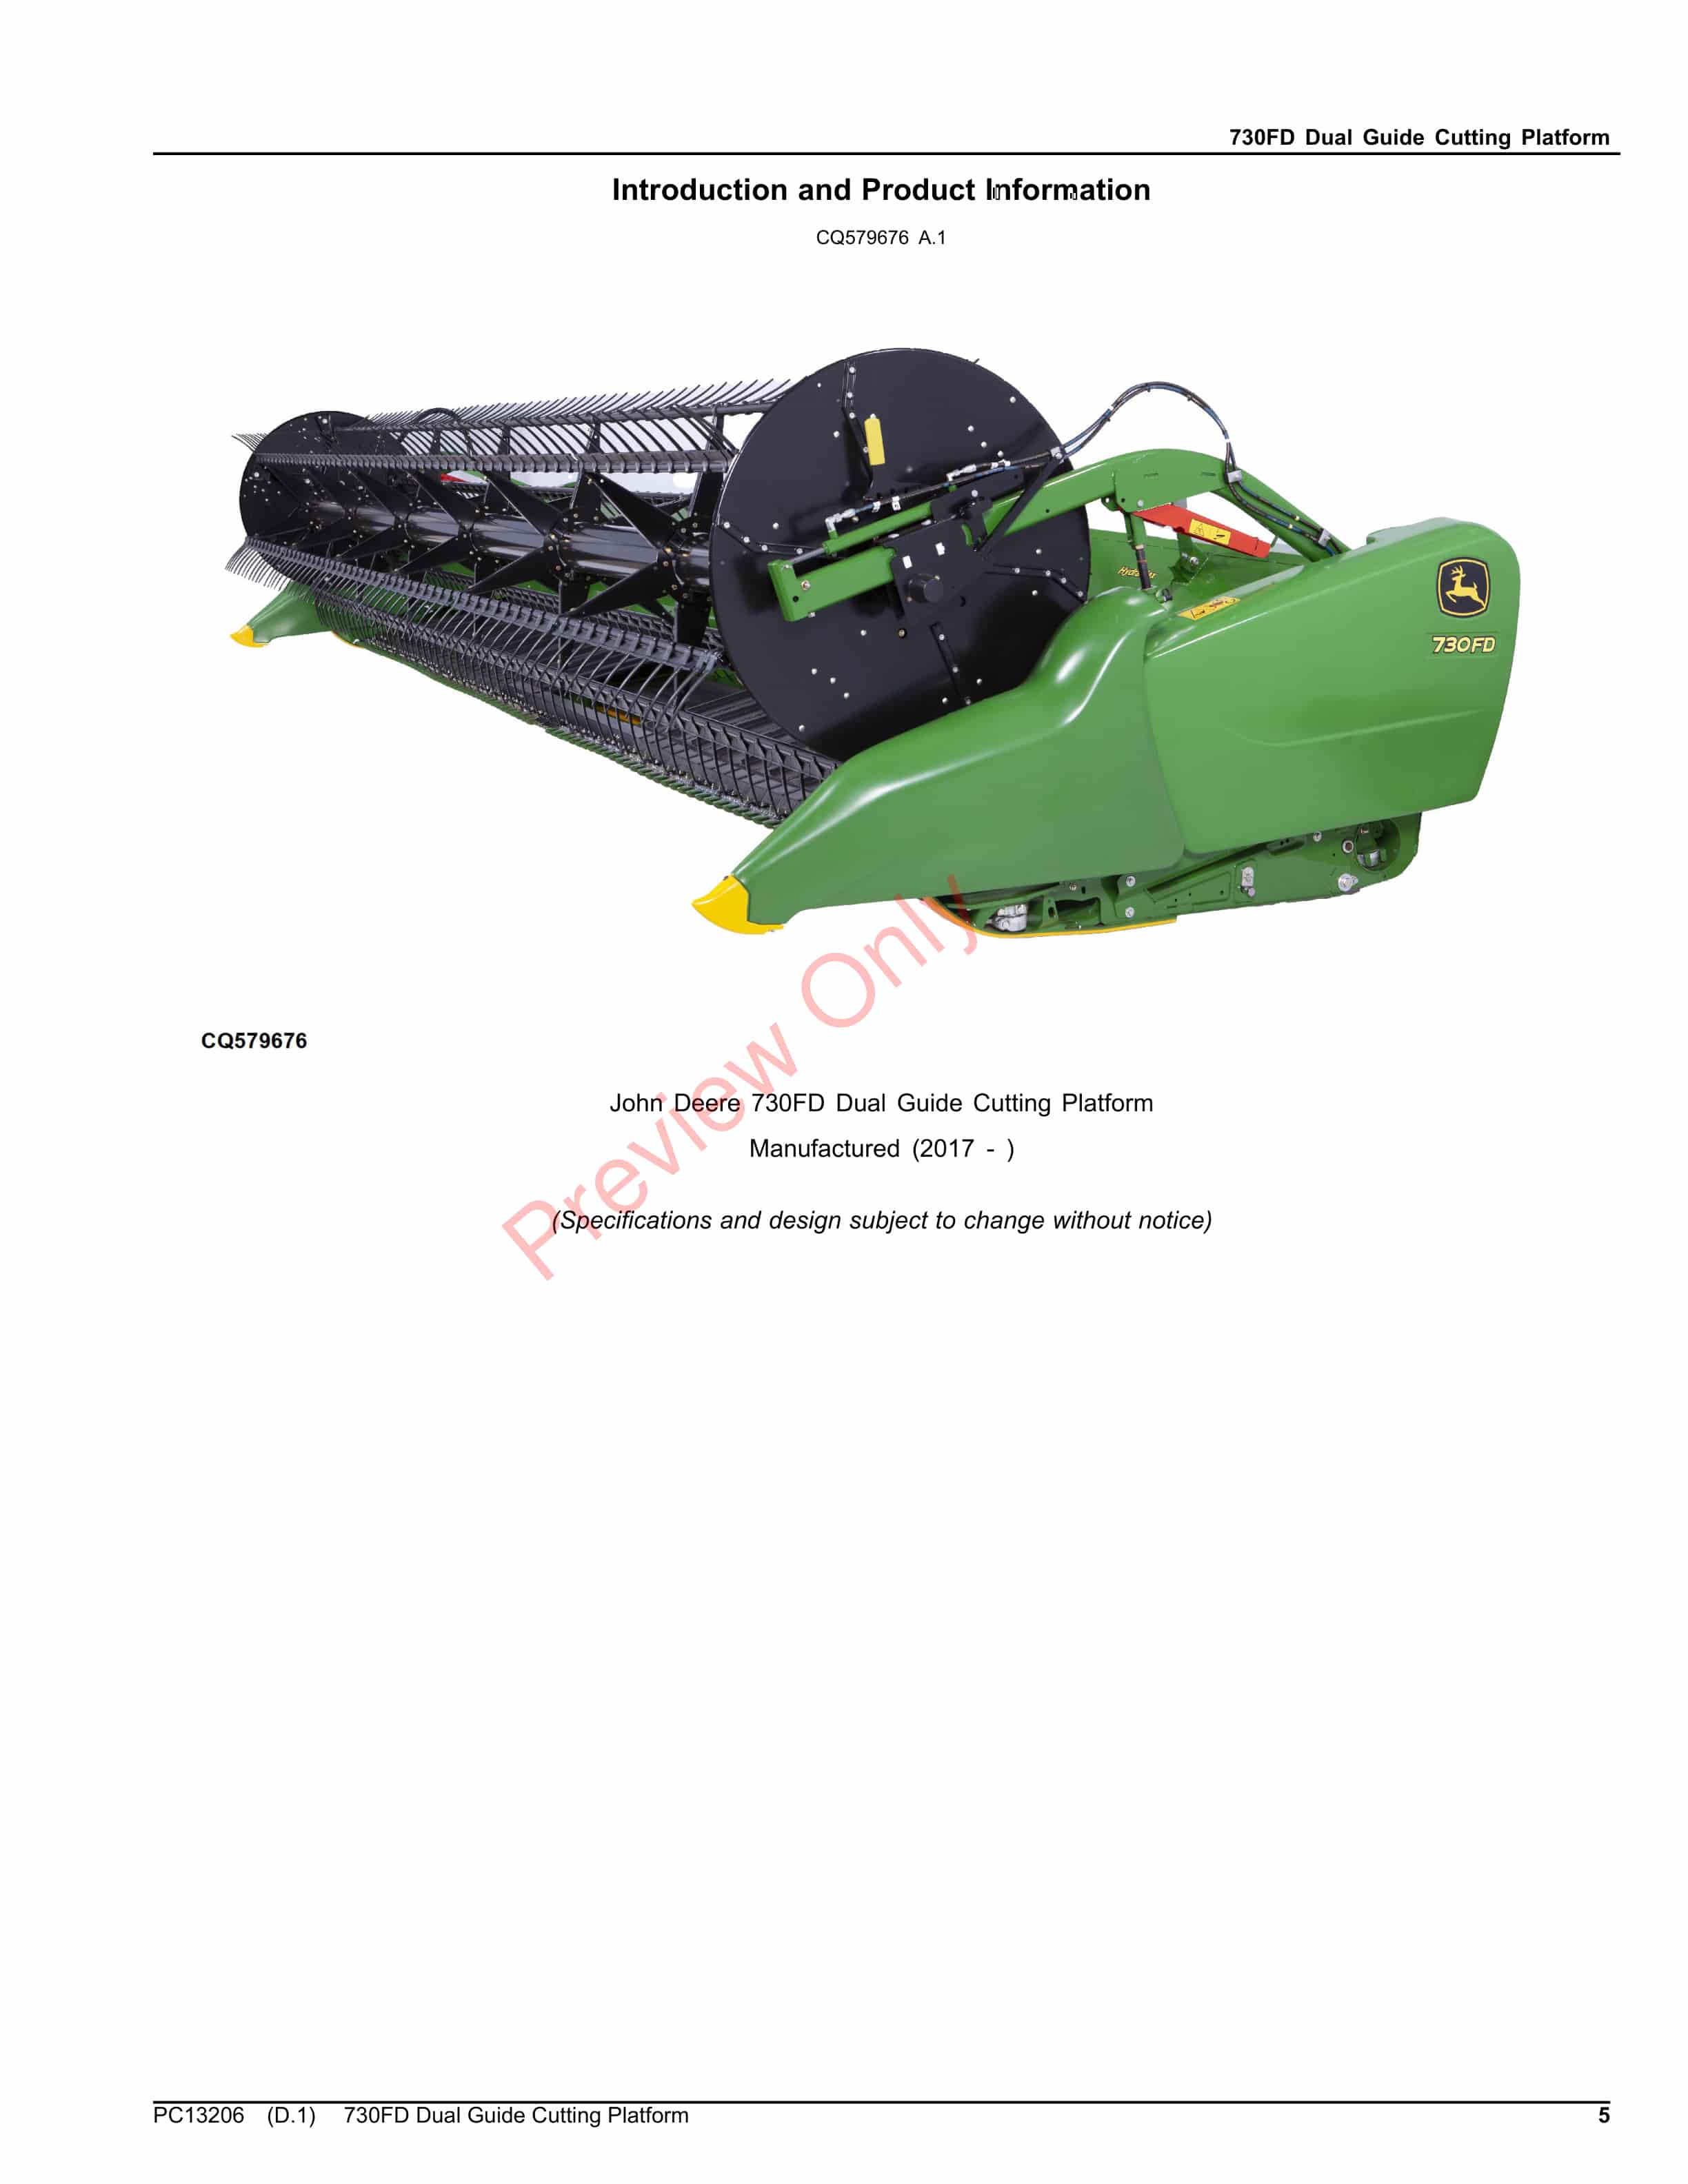 John Deere 730FD Dual Guide Cutting Platform Parts Catalog PC13206 10SEP23-5